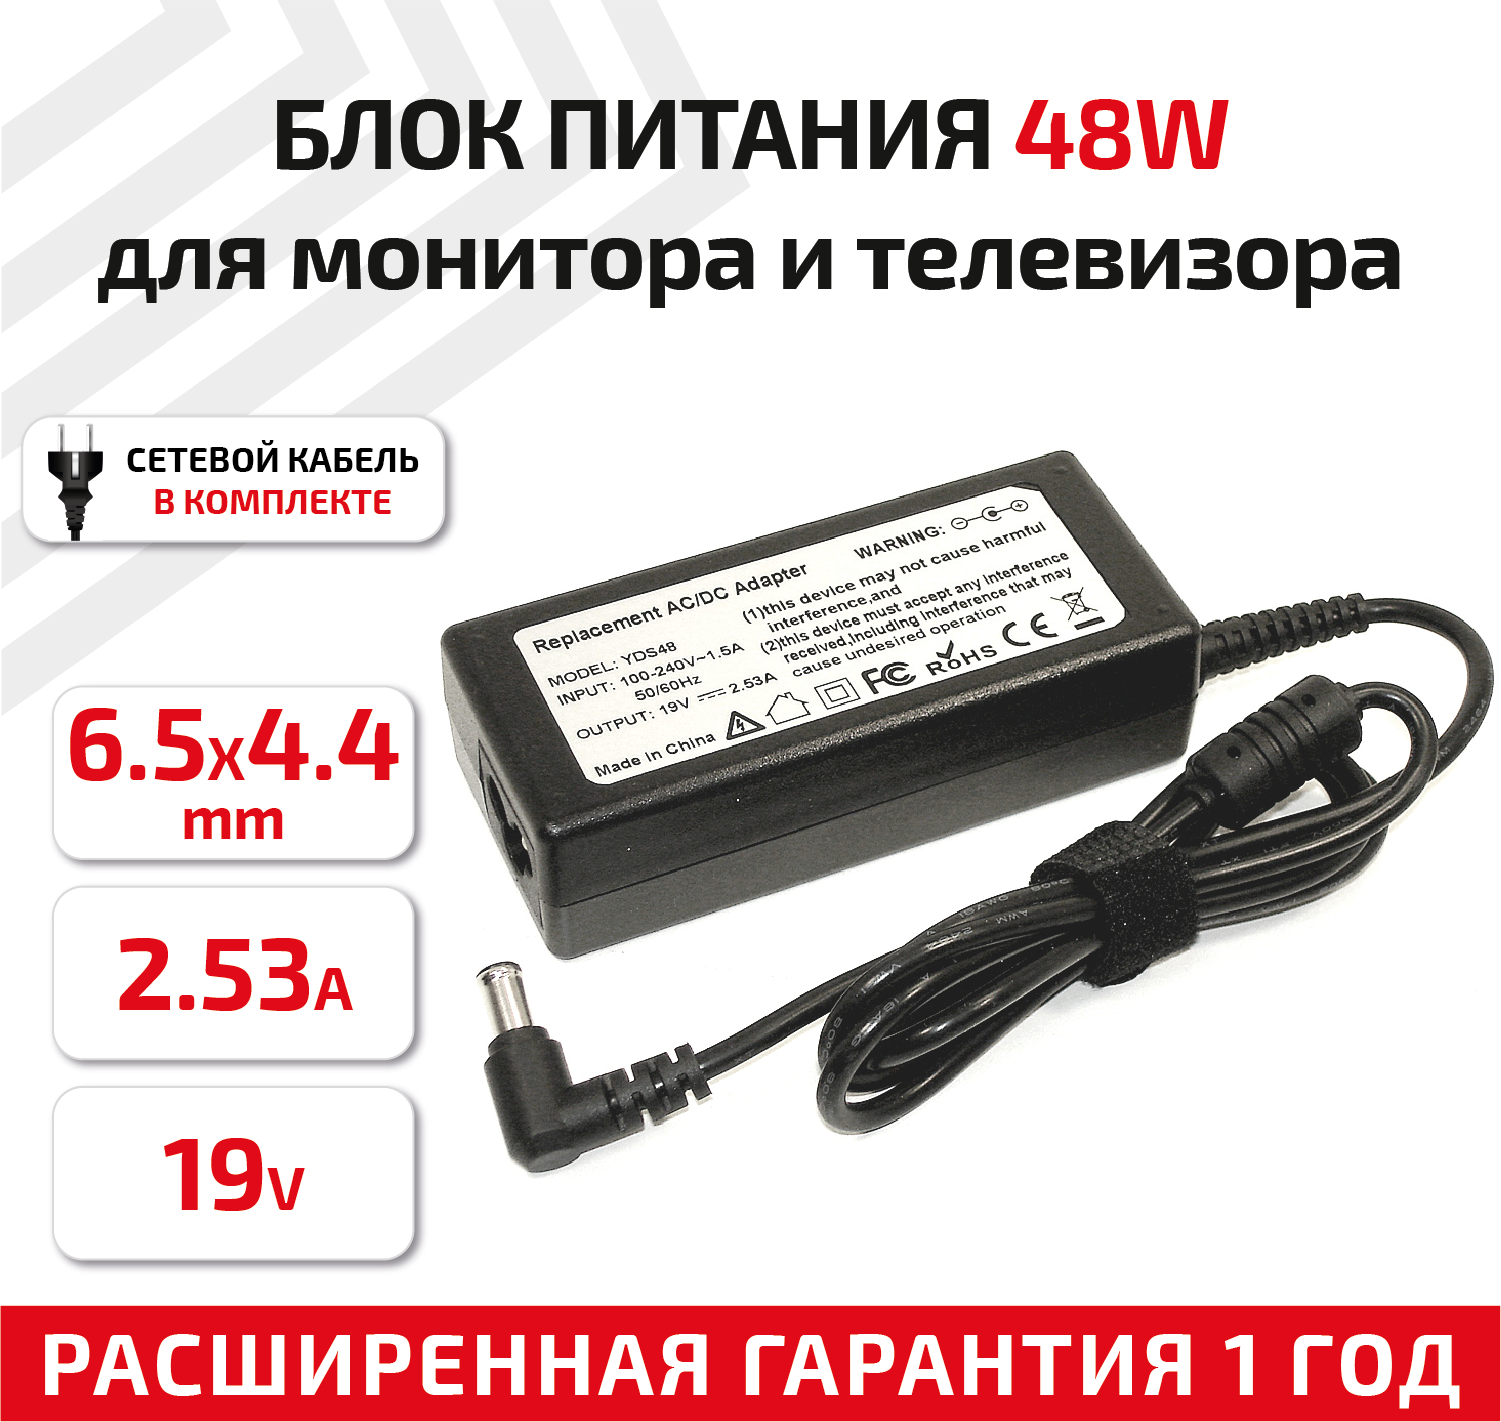 Зарядное устройство (блок питания/зарядка) для монитора и телевизора LCD 19В 2.53А 48Вт 6.5x4.4мм OEM